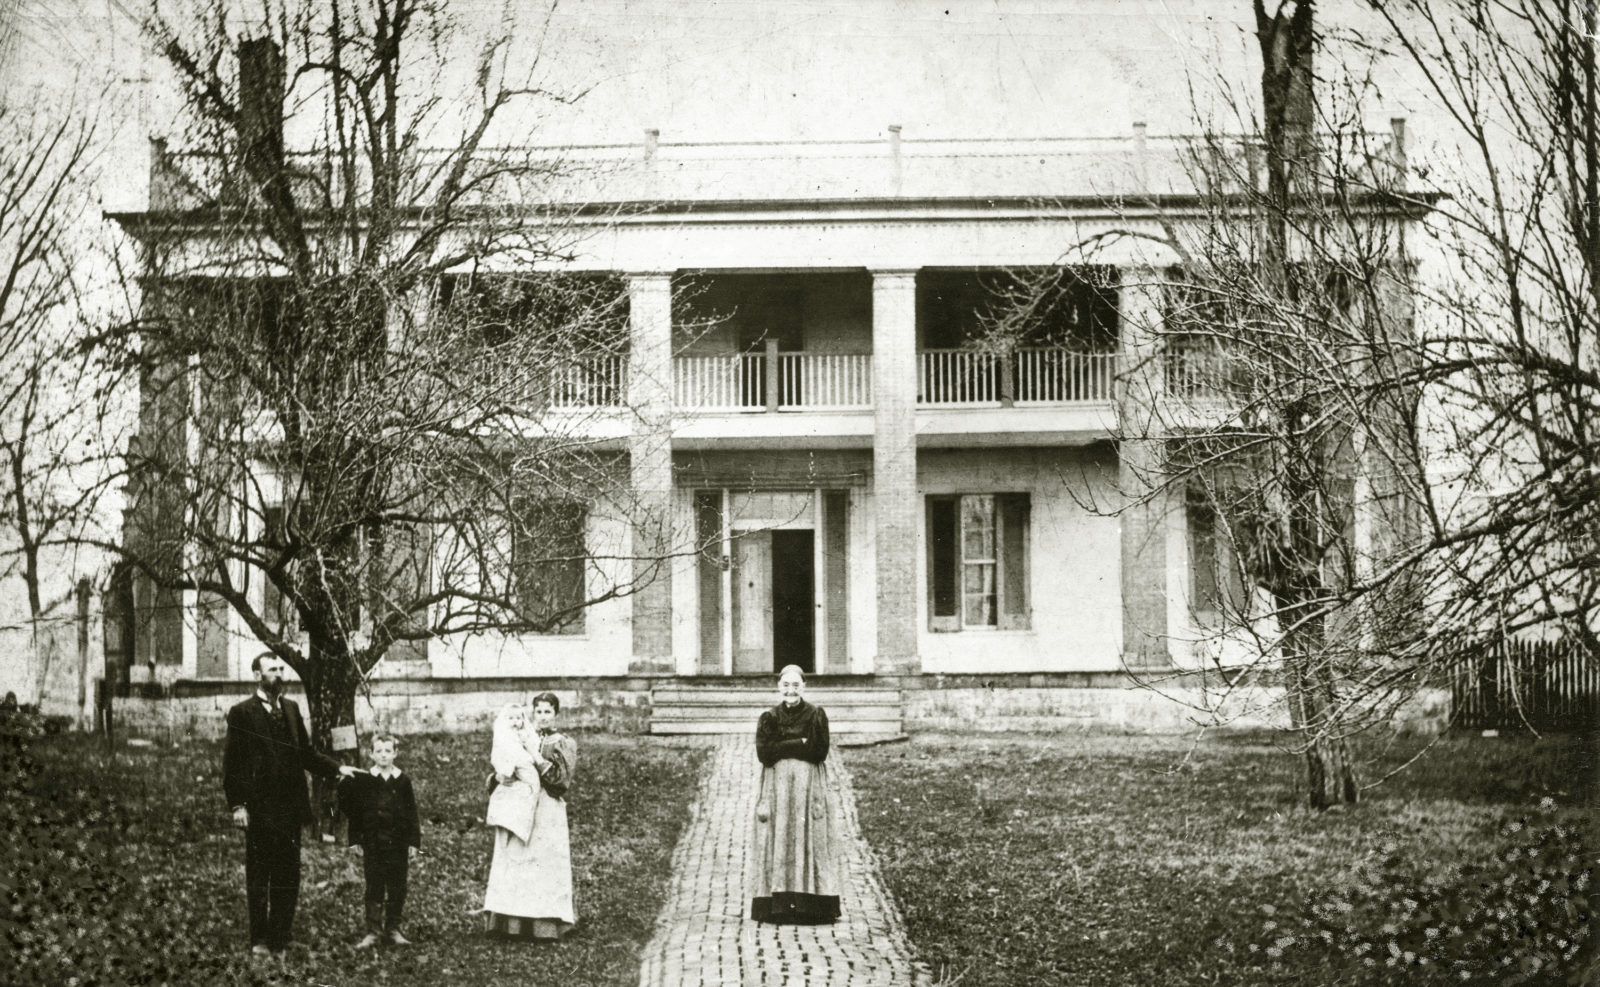 The Lary House, circa 1848